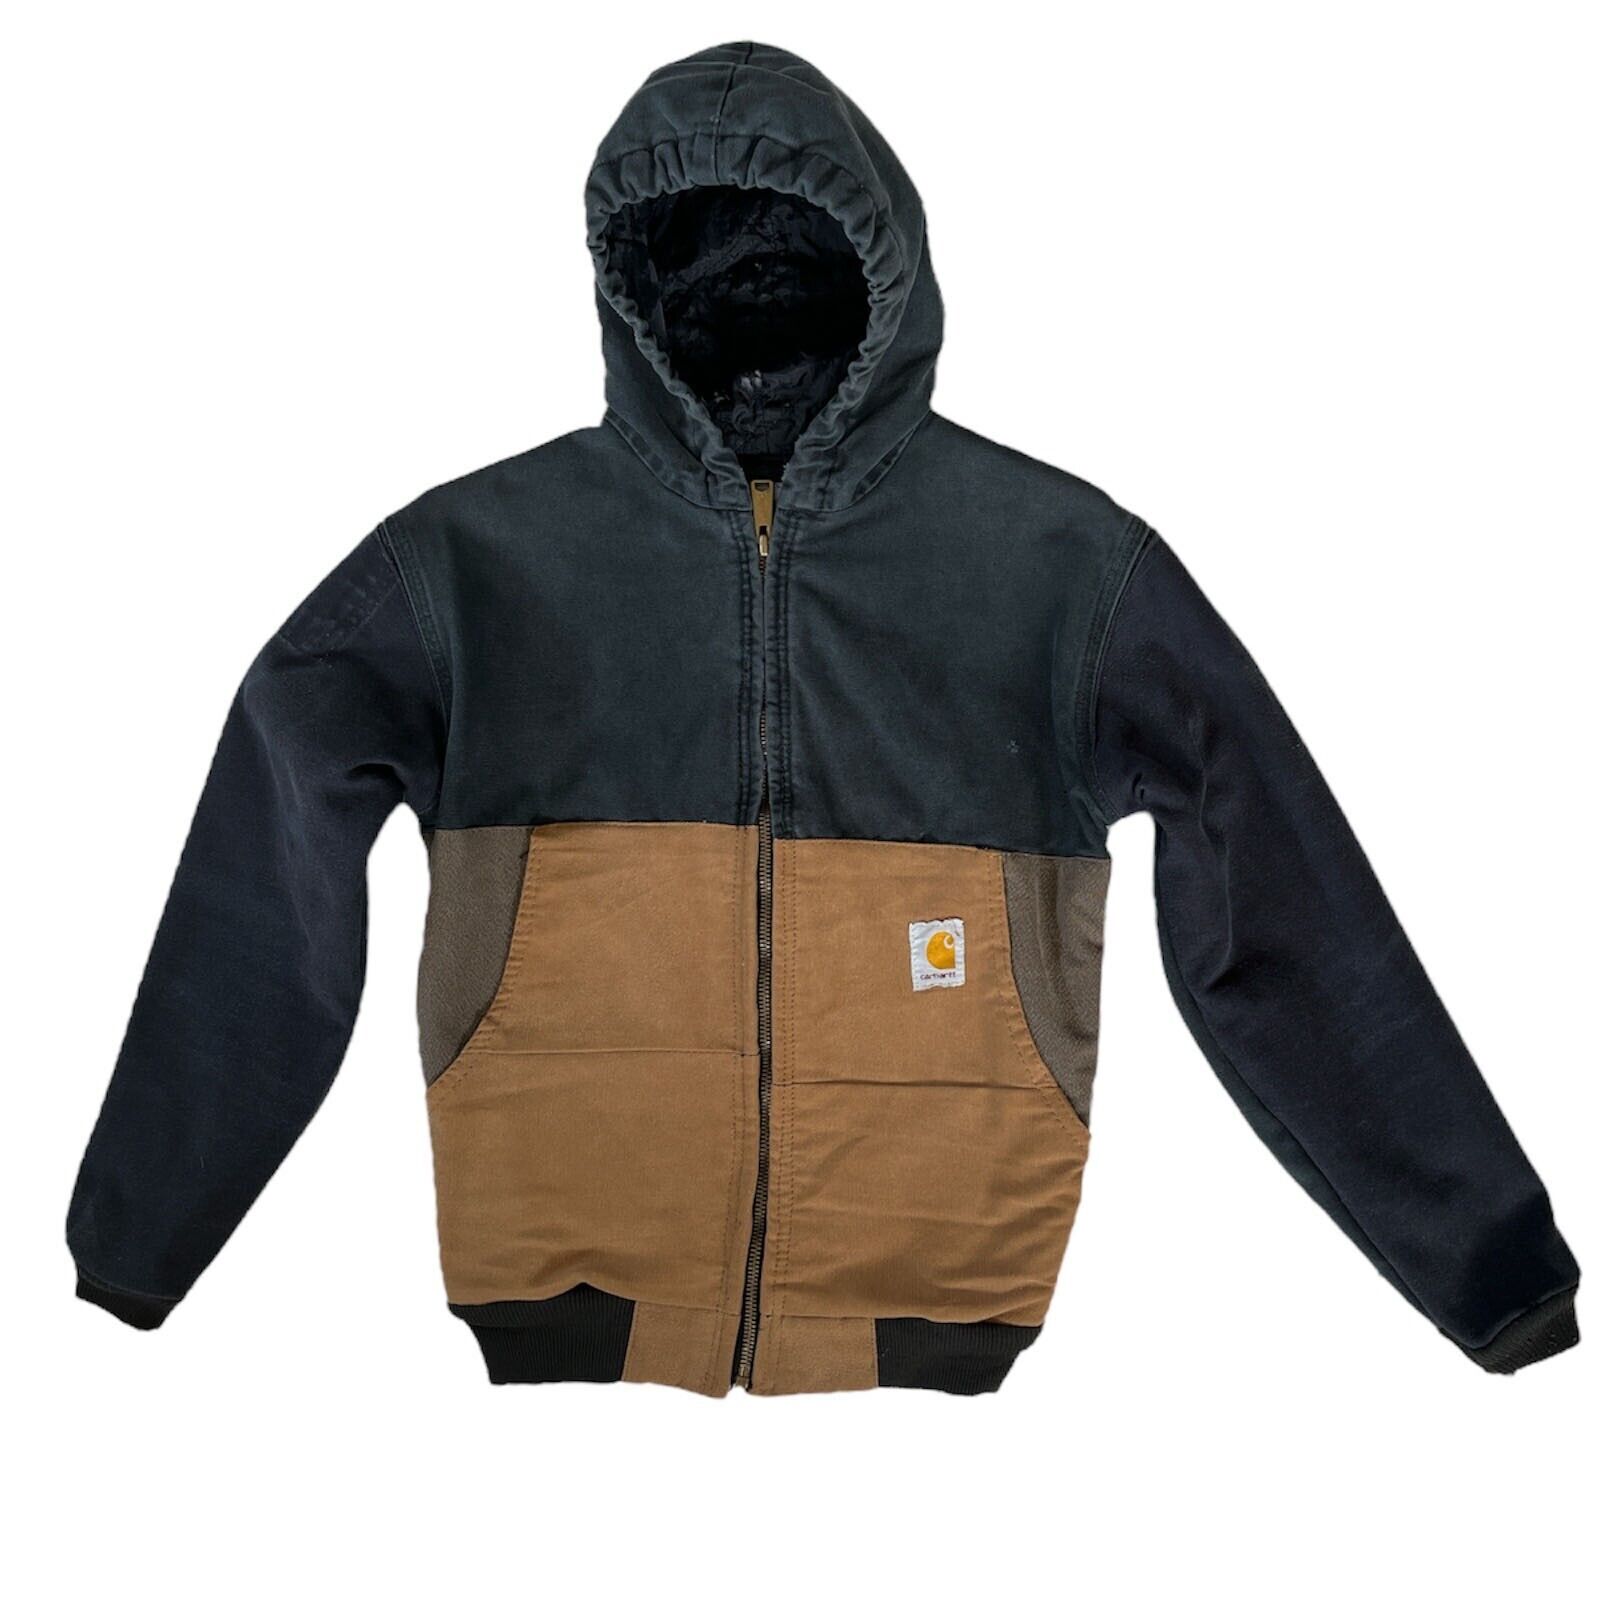 https://peppertreelondon.co.uk/wp-content/uploads/imported/3/Carhartt-Reworked-Jacket-Workwear-Hooded-Vintage-Bomber-Boys-M9-10-Years-C3402-275871018143.jpg